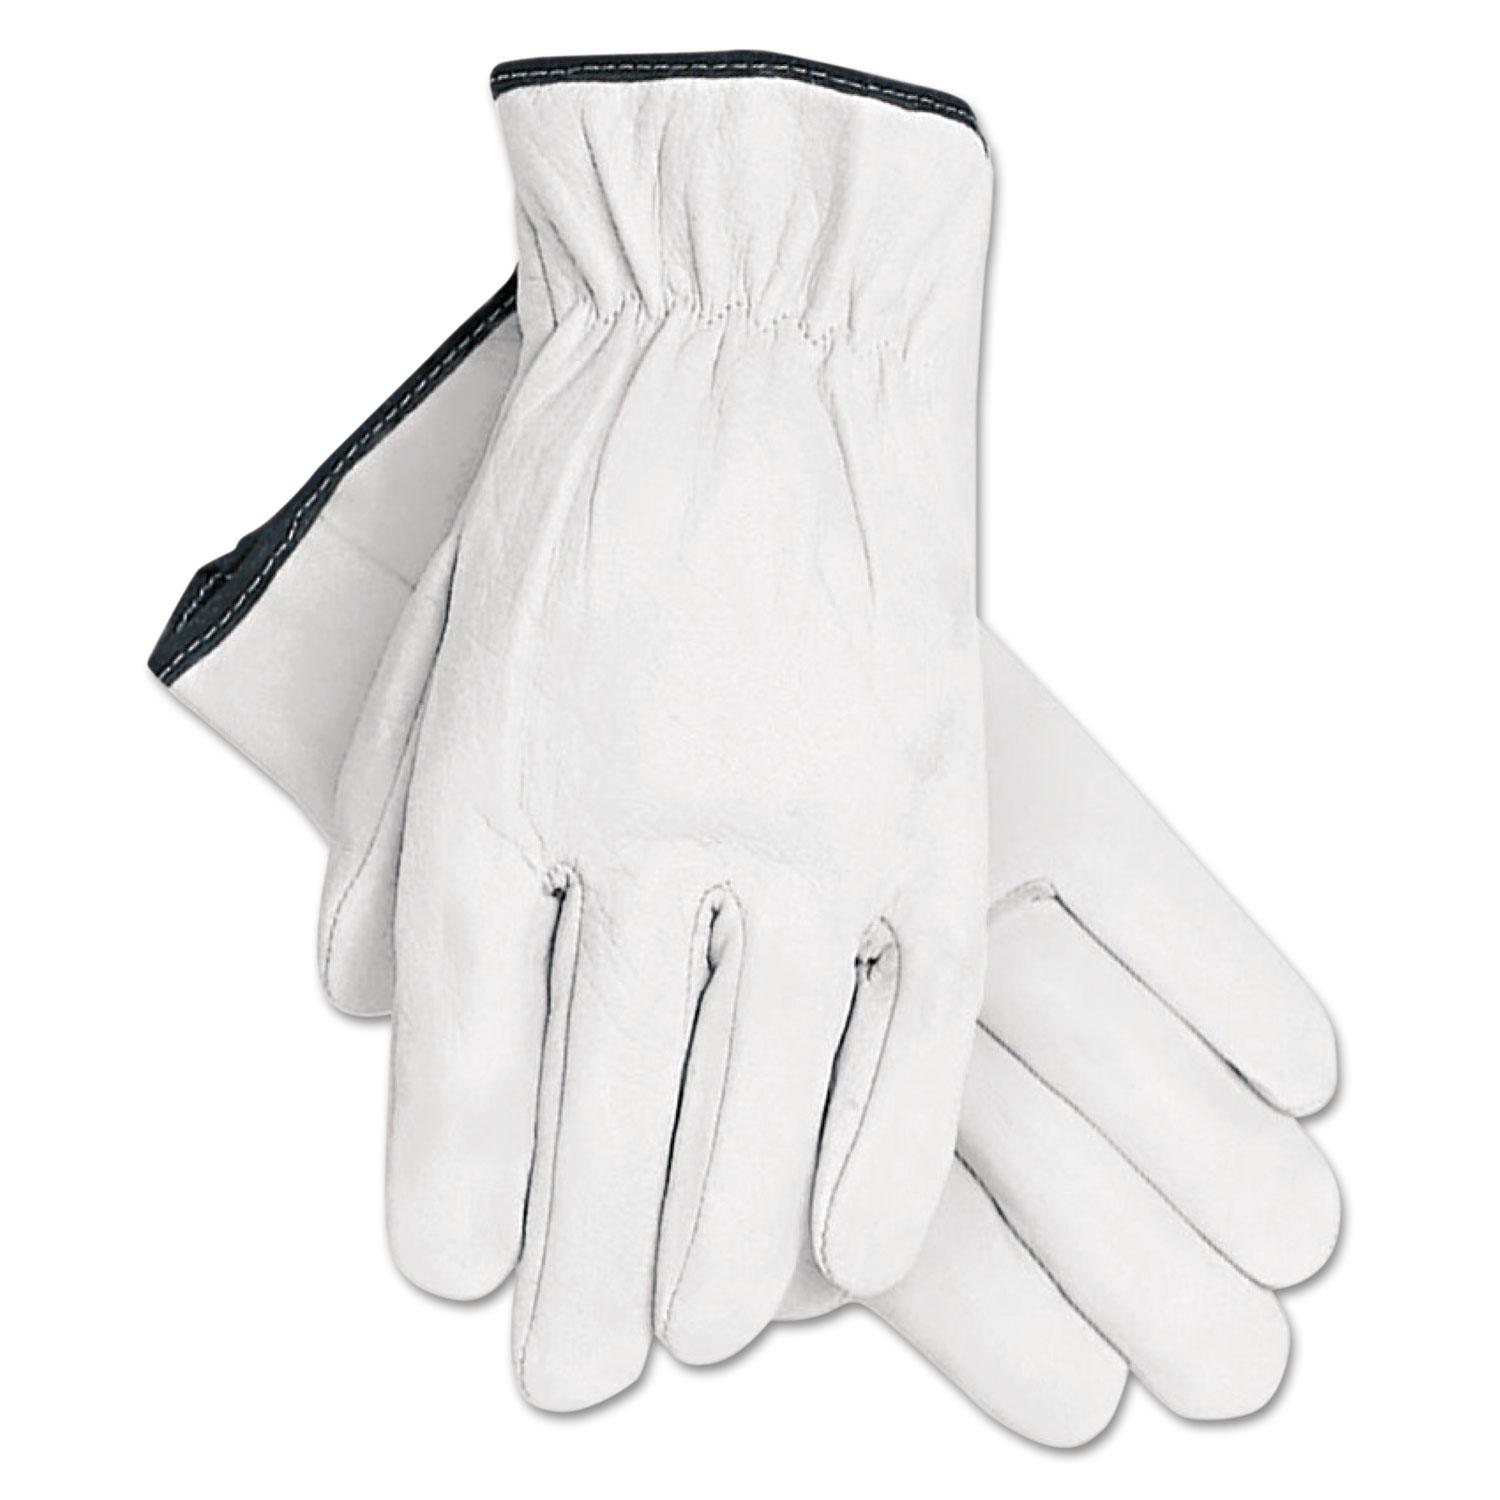  MCR Safety 3601XL Grain Goatskin Driver Gloves, White, X-Large, 12 Pairs (MPG3601XL) 